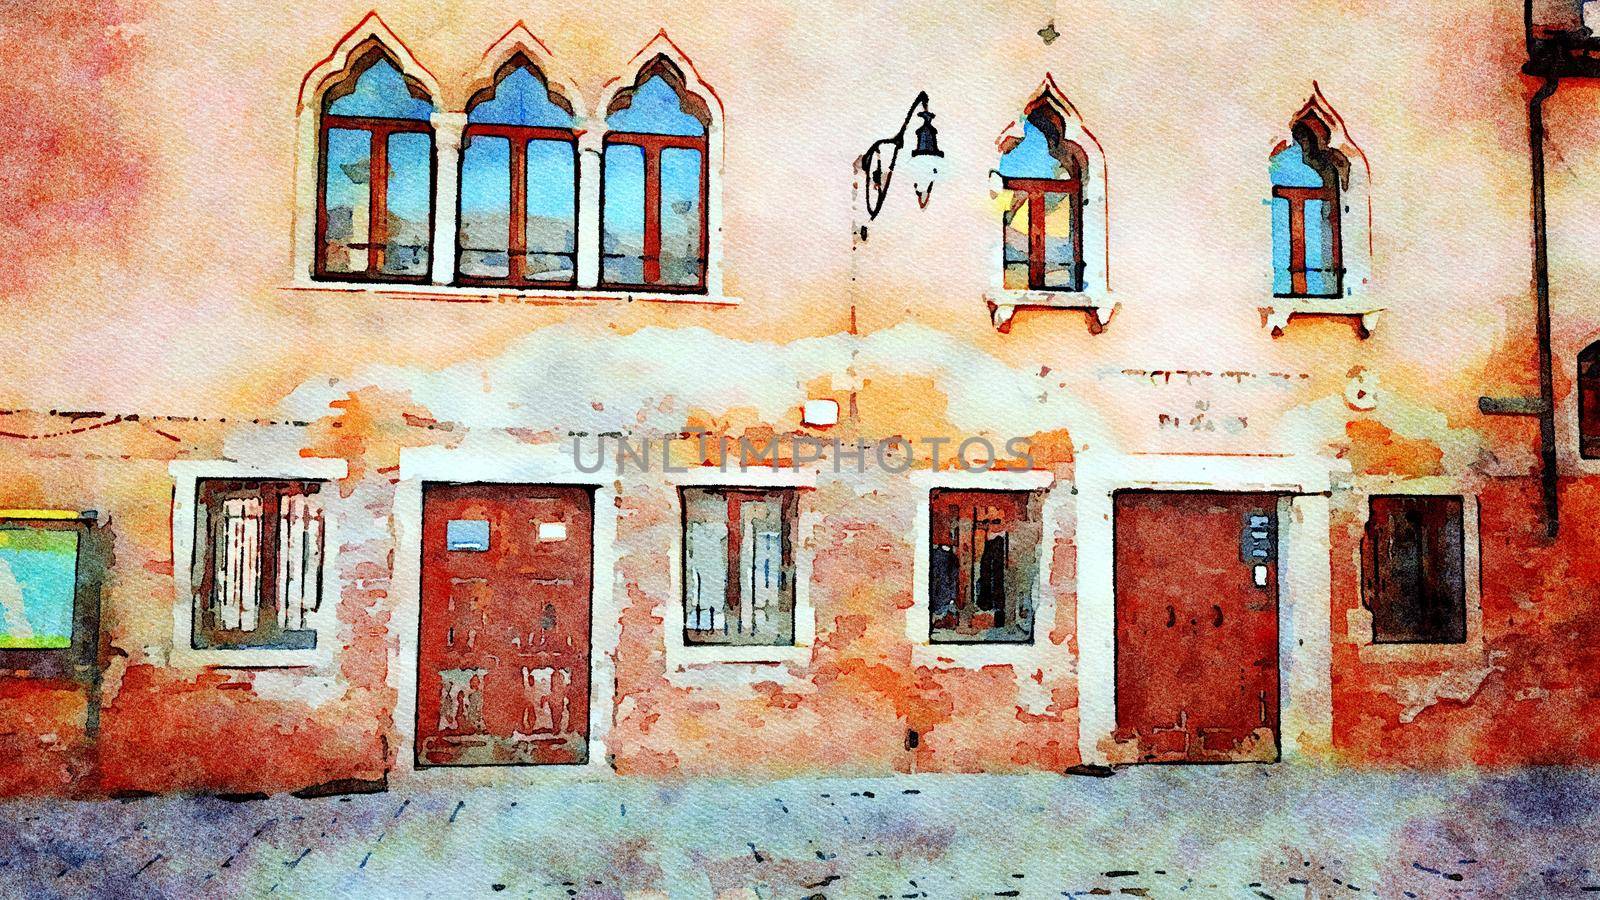 Watercolor representing the facade of a historic building in the square of Burano in Venice